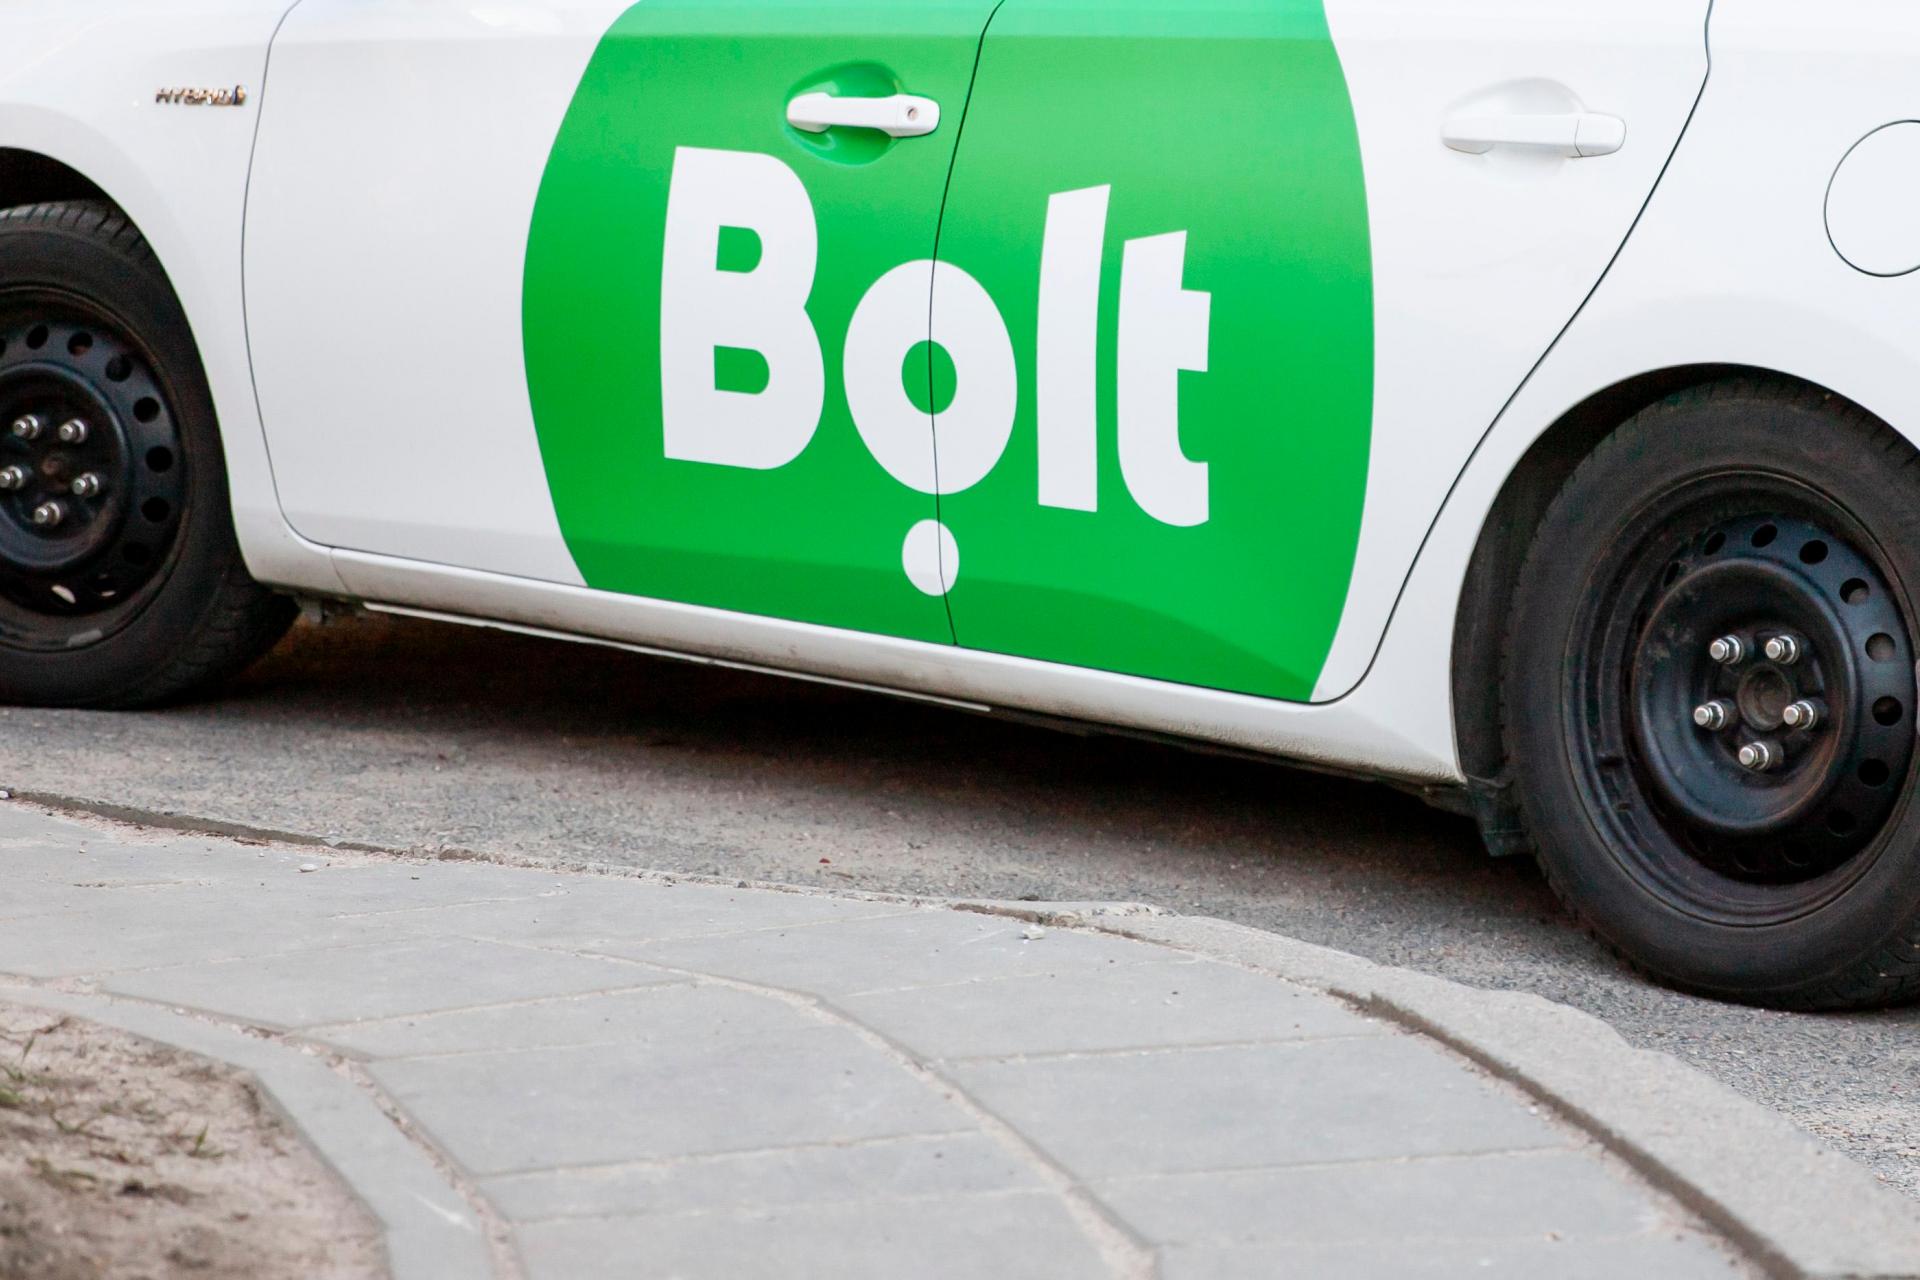 Bolt Receives $709 Million For Expansion